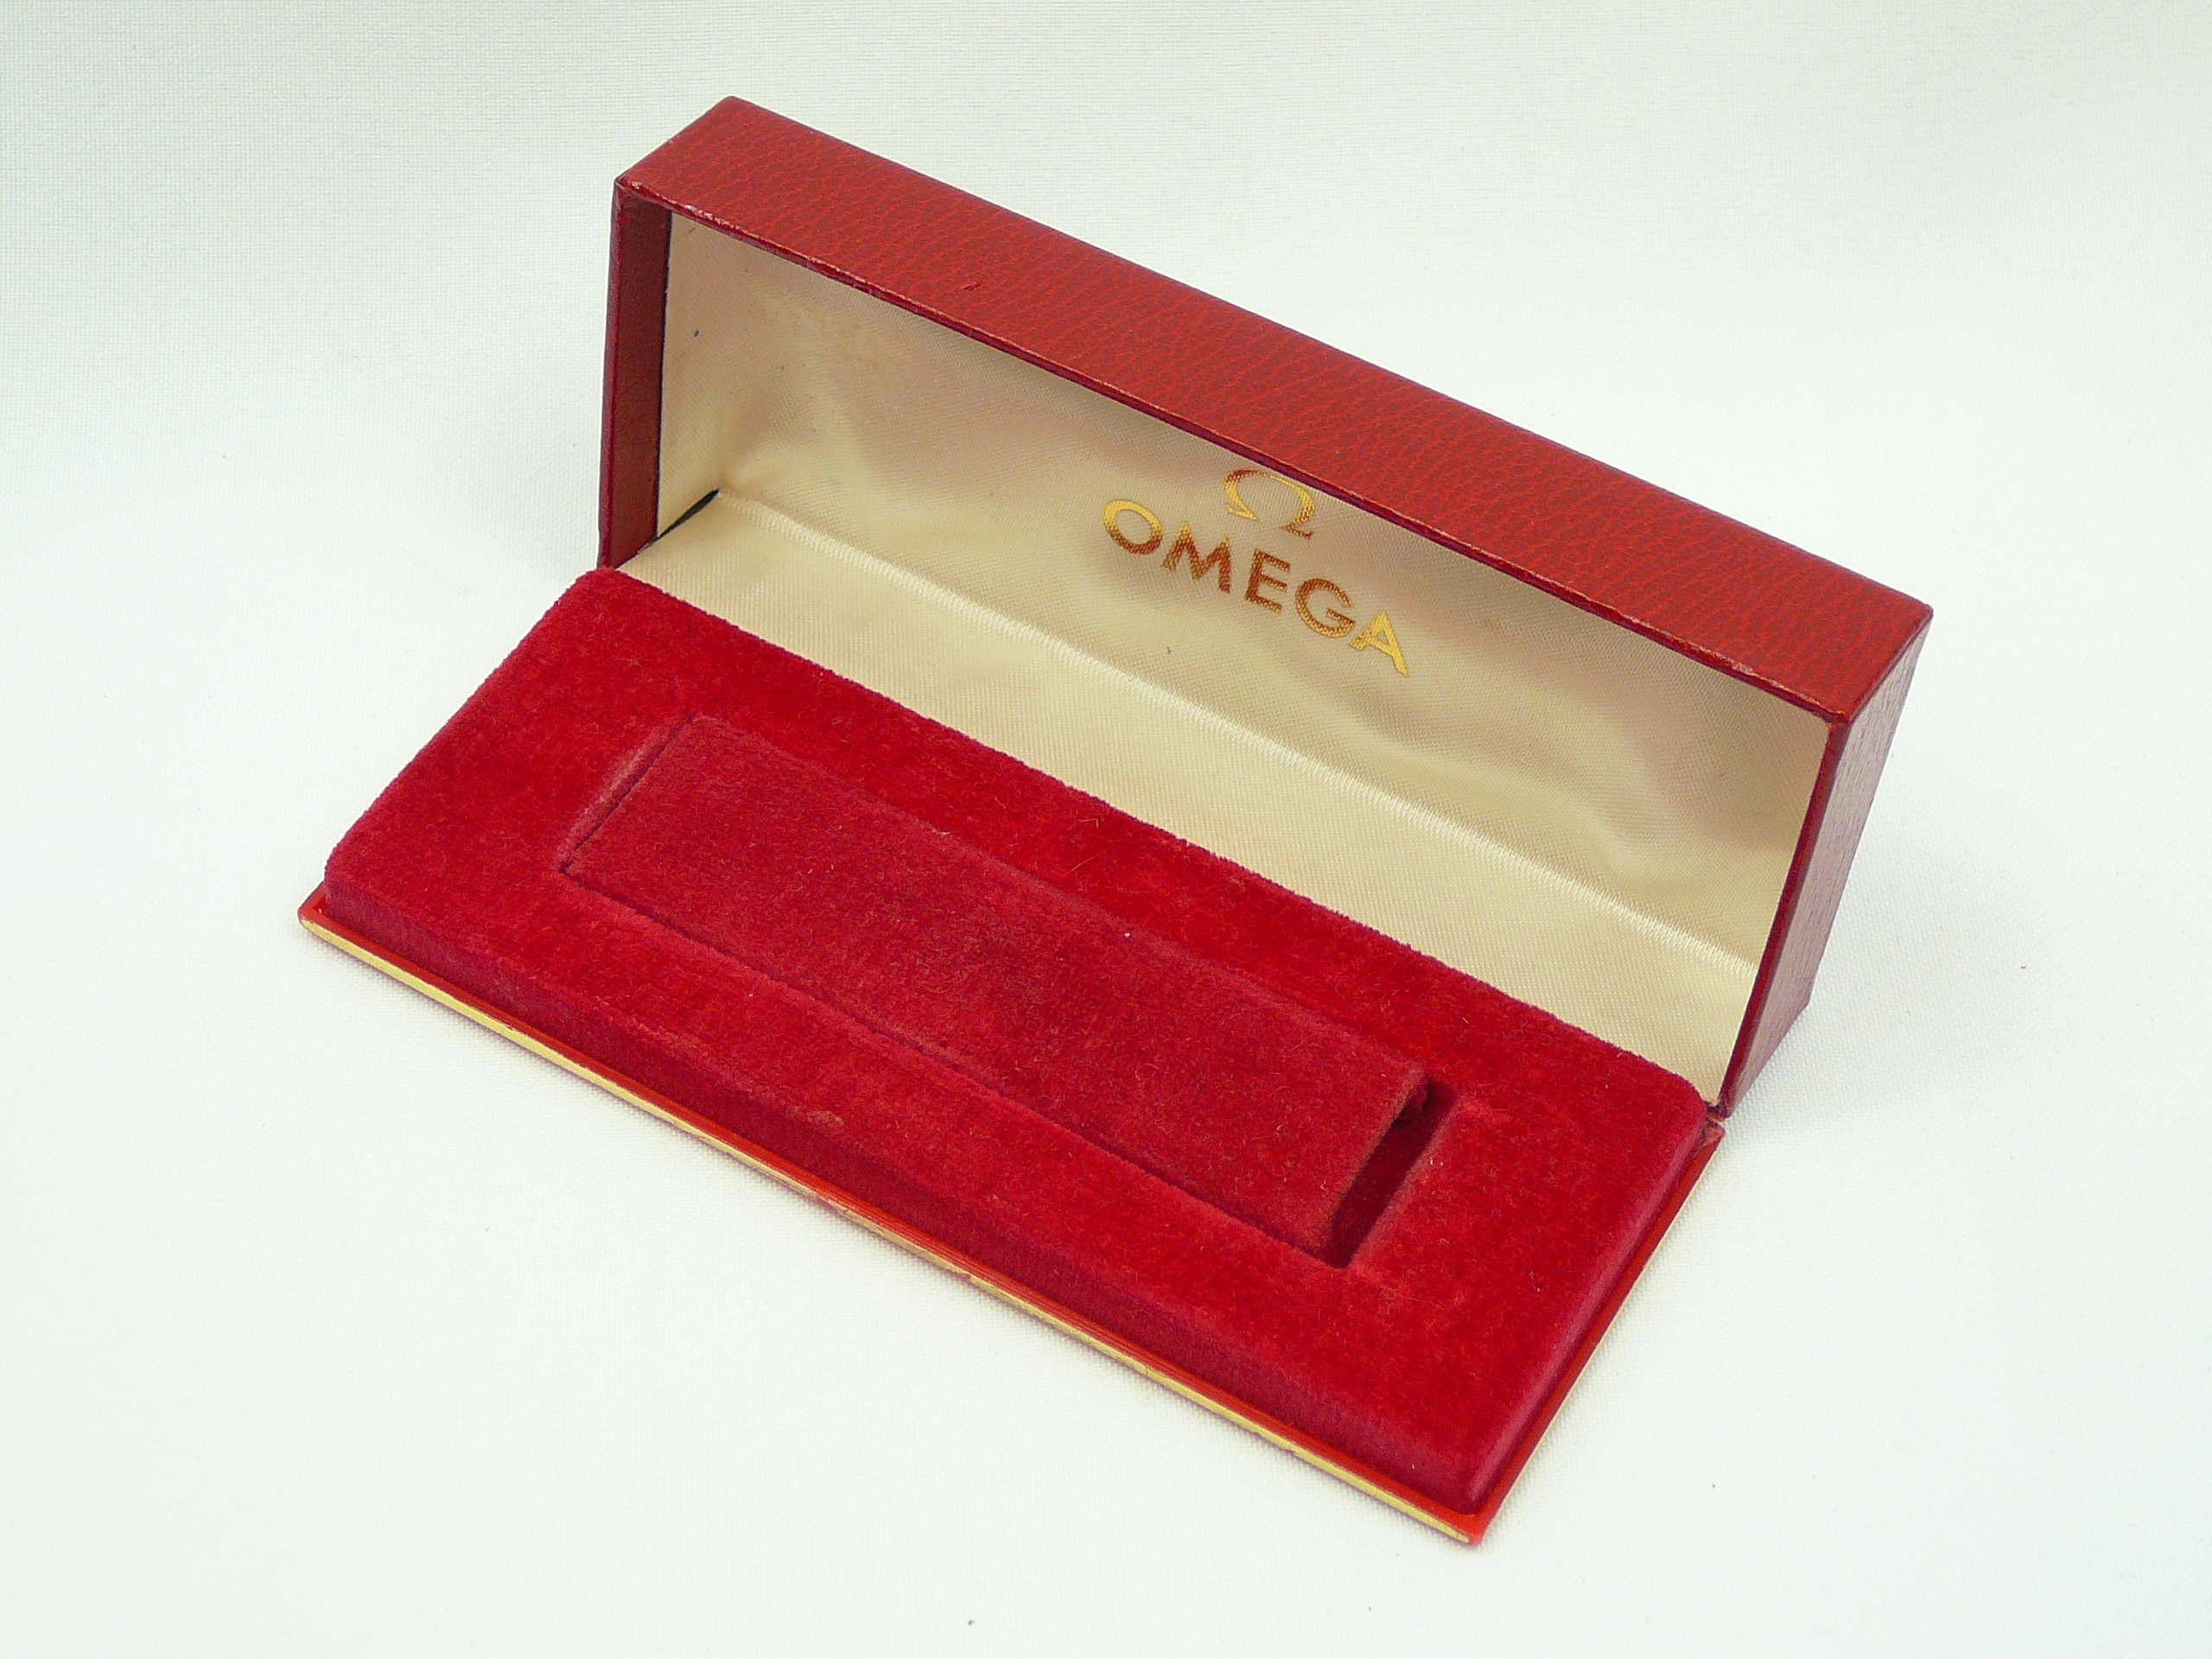 Vintage Omega watch box - Image 2 of 2